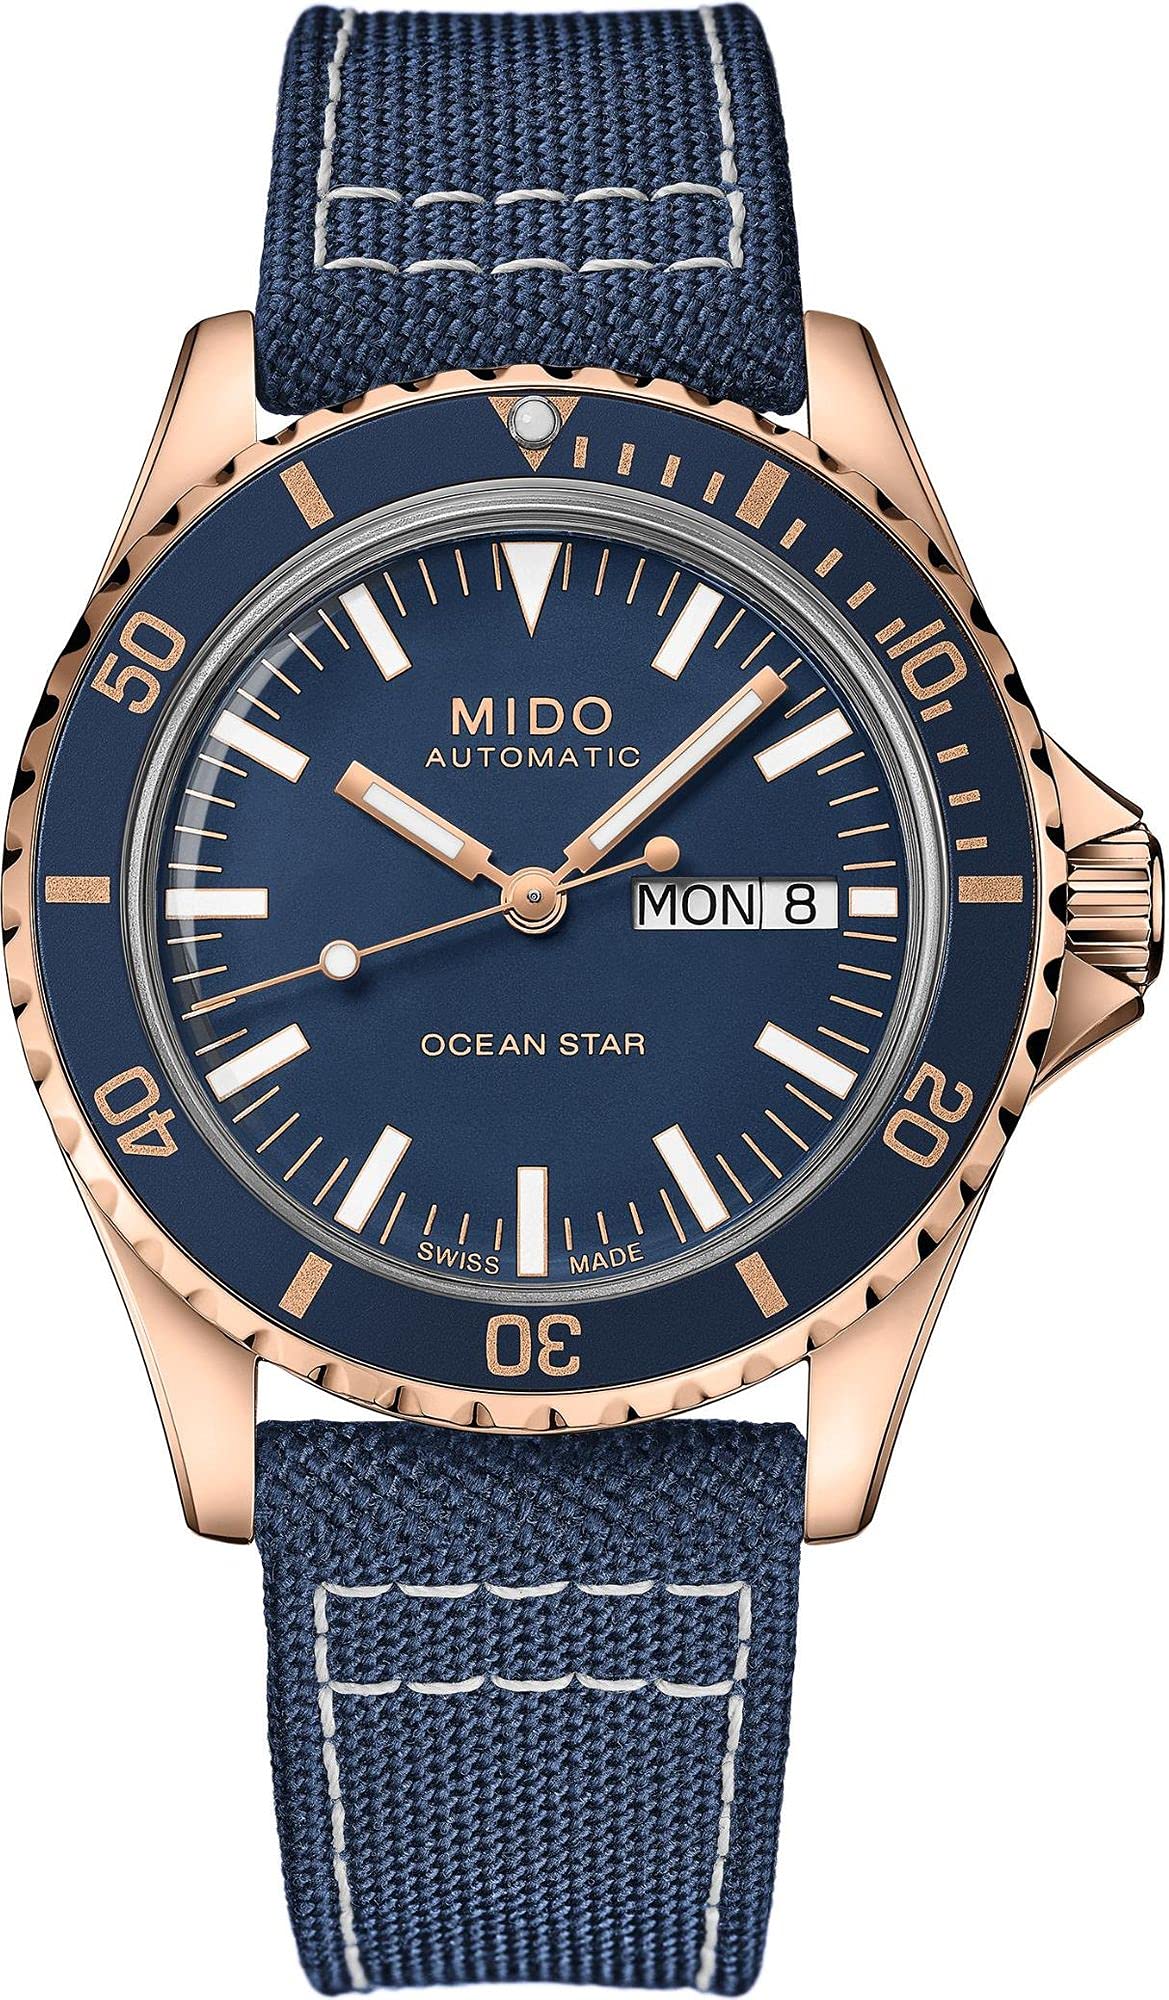 Mido M026.830.38.041.0 Men's Watch